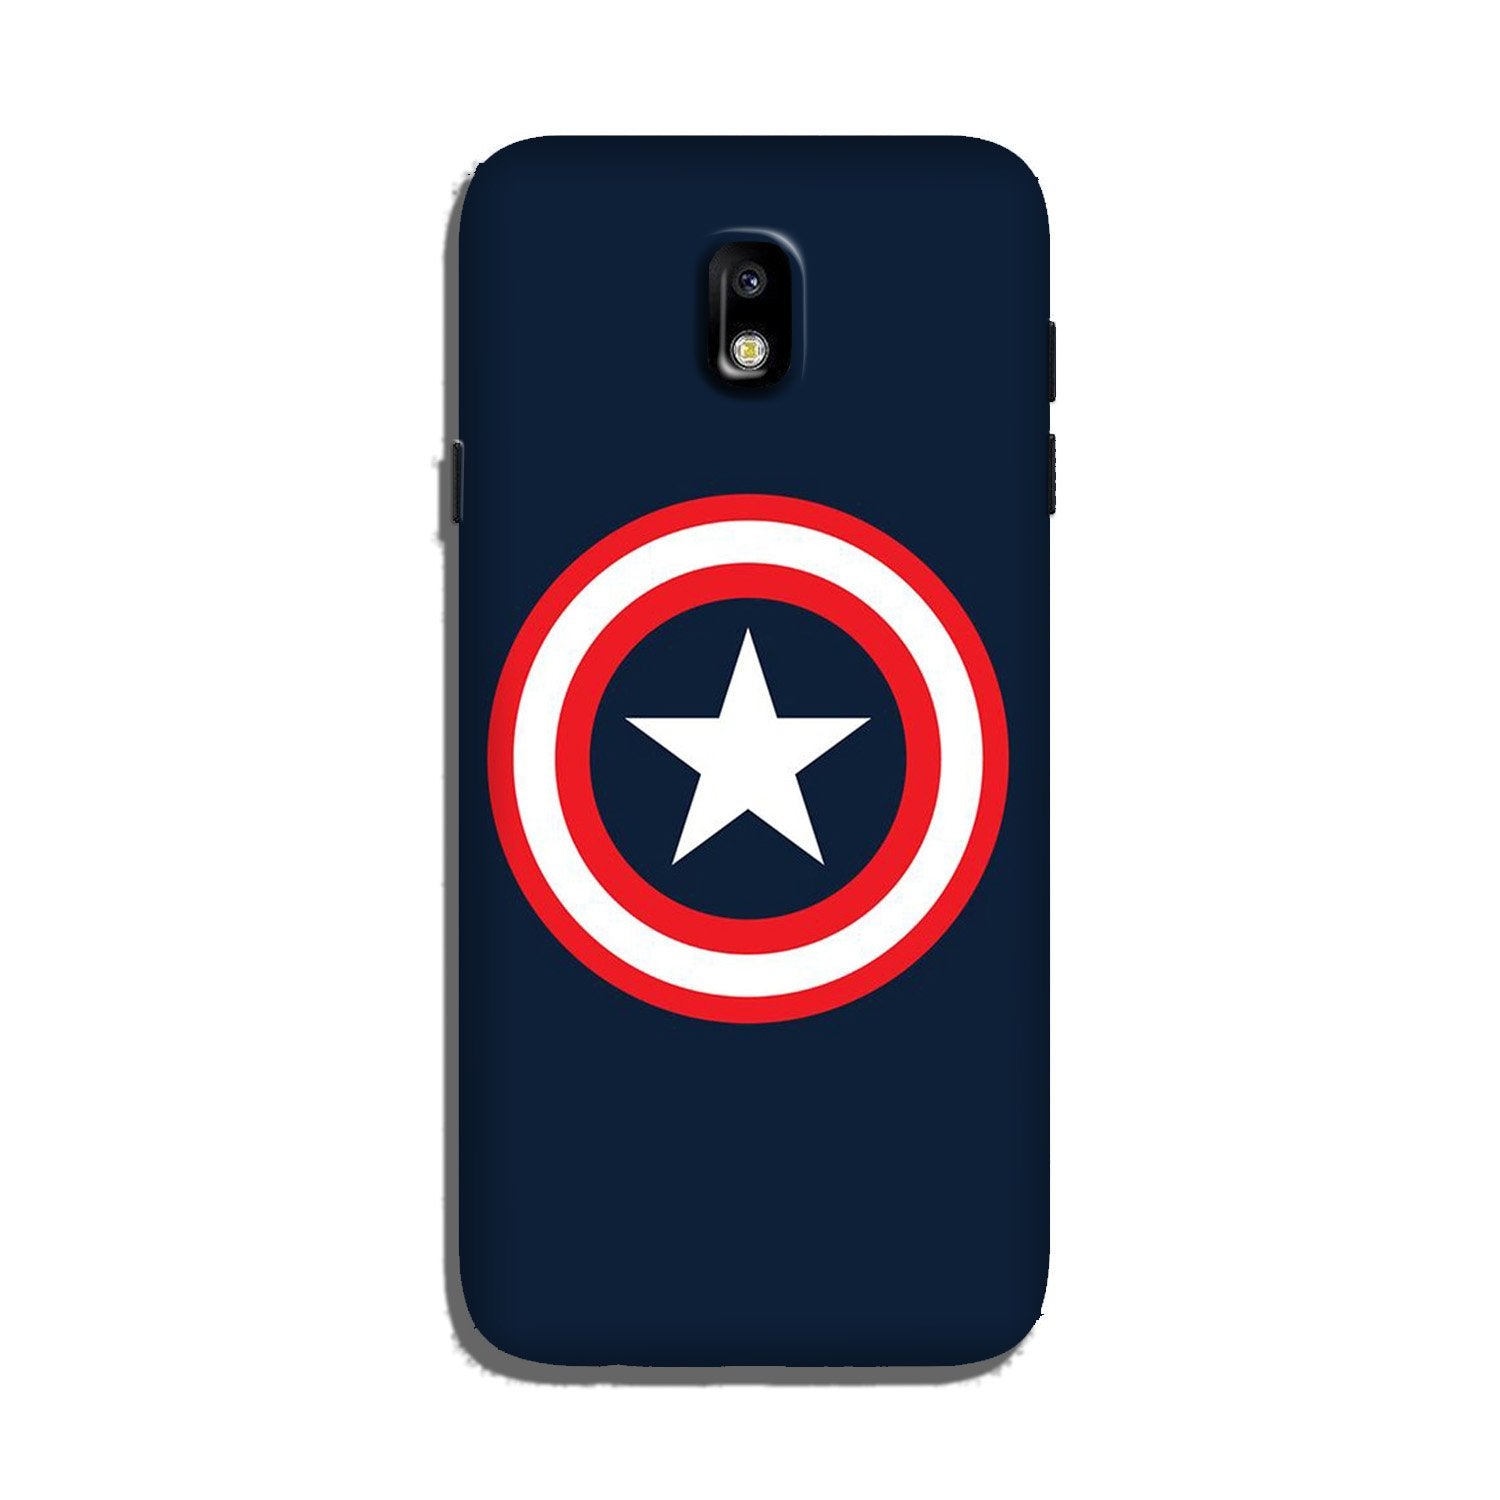 Captain America Case for Galaxy J3 Pro